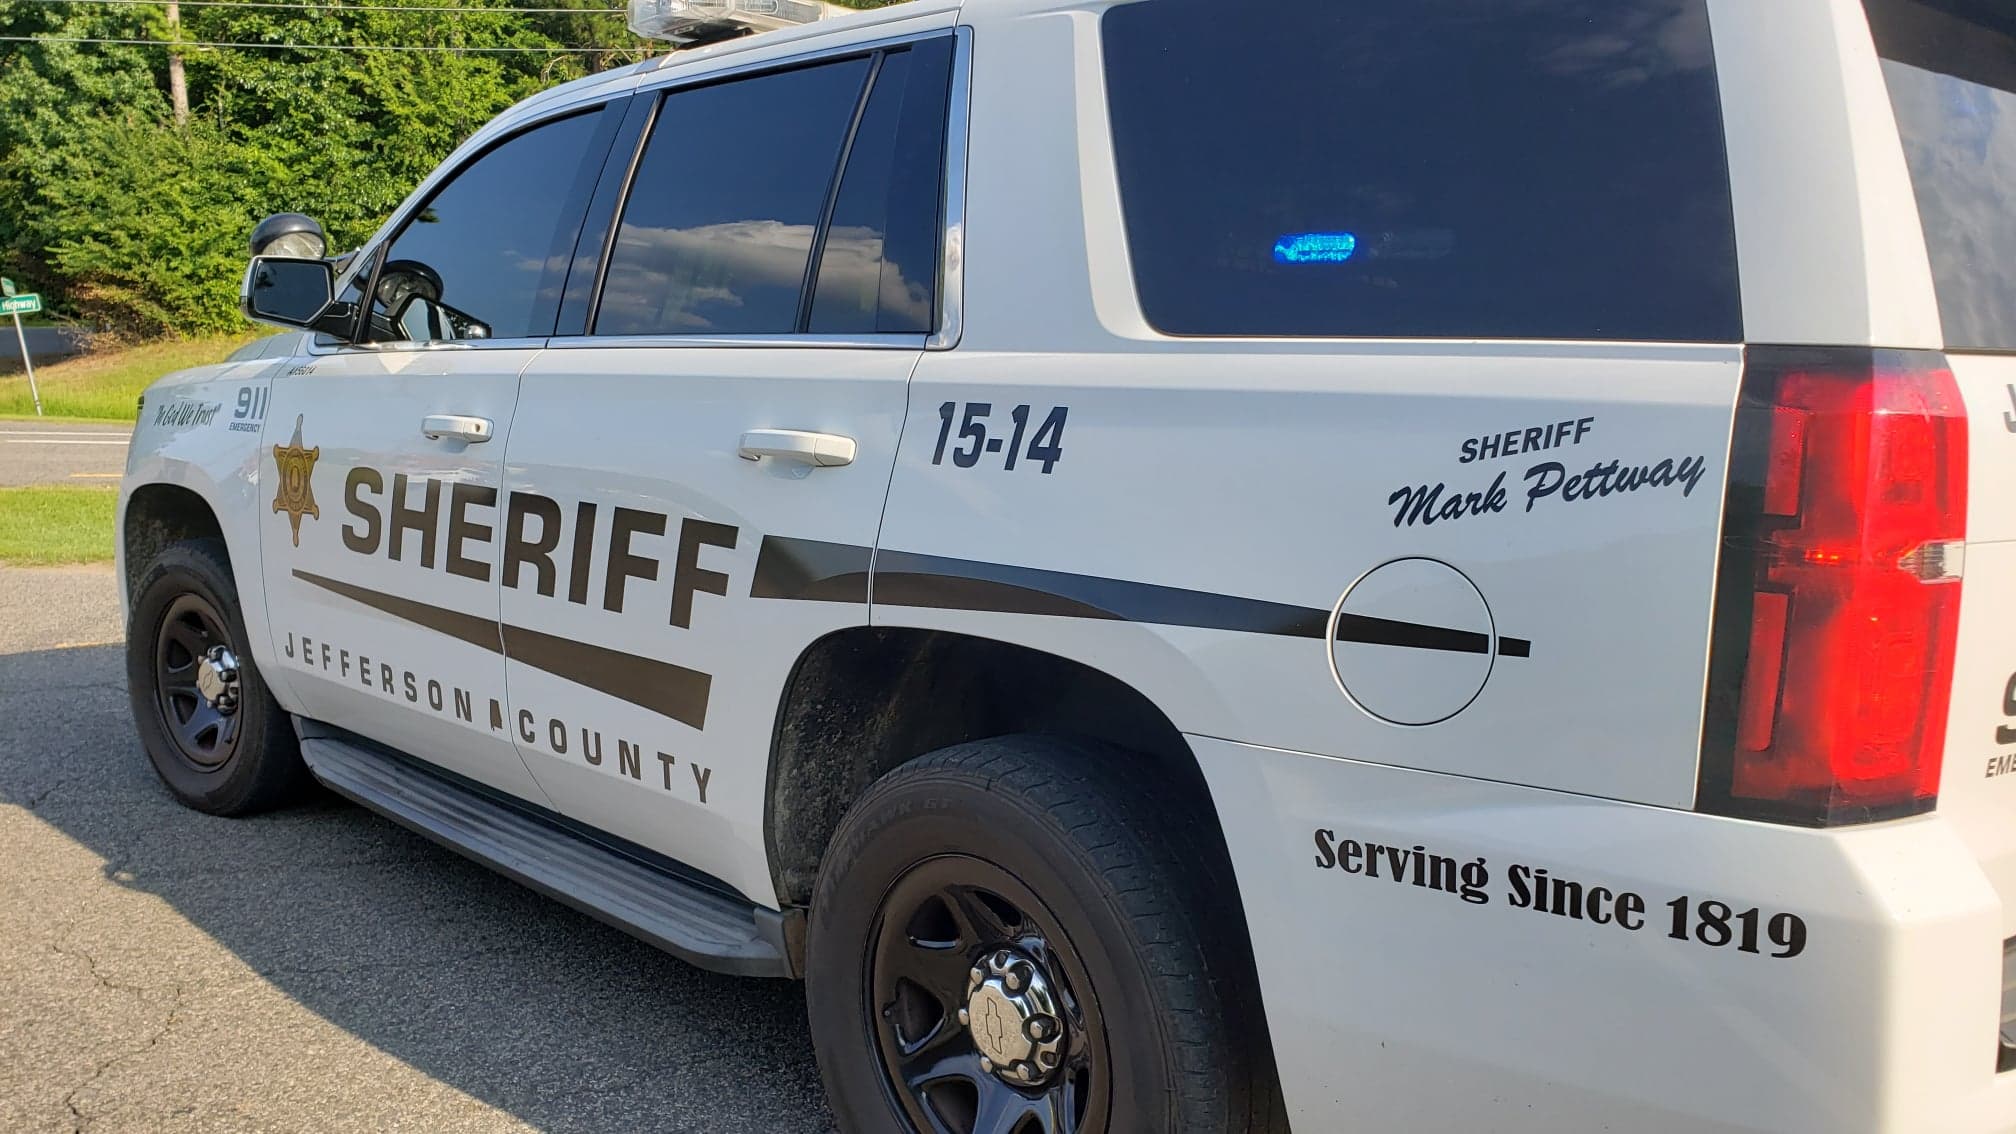 Body found in west Jefferson County identified as missing man